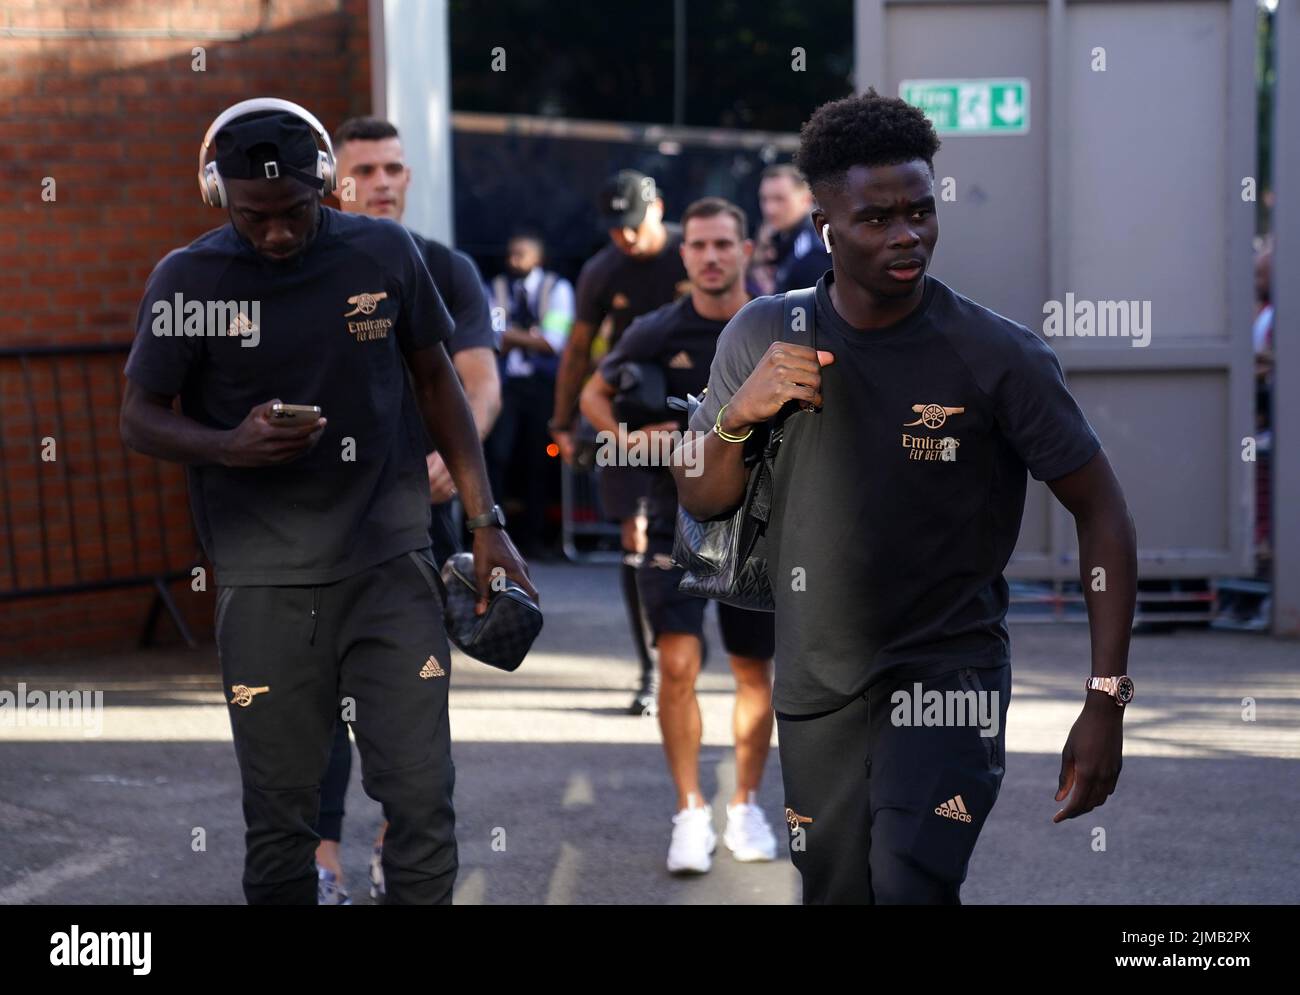 Bukayo Saka del Arsenal llega para el partido de la Premier League en Selhurst Park, Londres. Fecha de la foto: Viernes 5 de agosto de 2022. Foto de stock